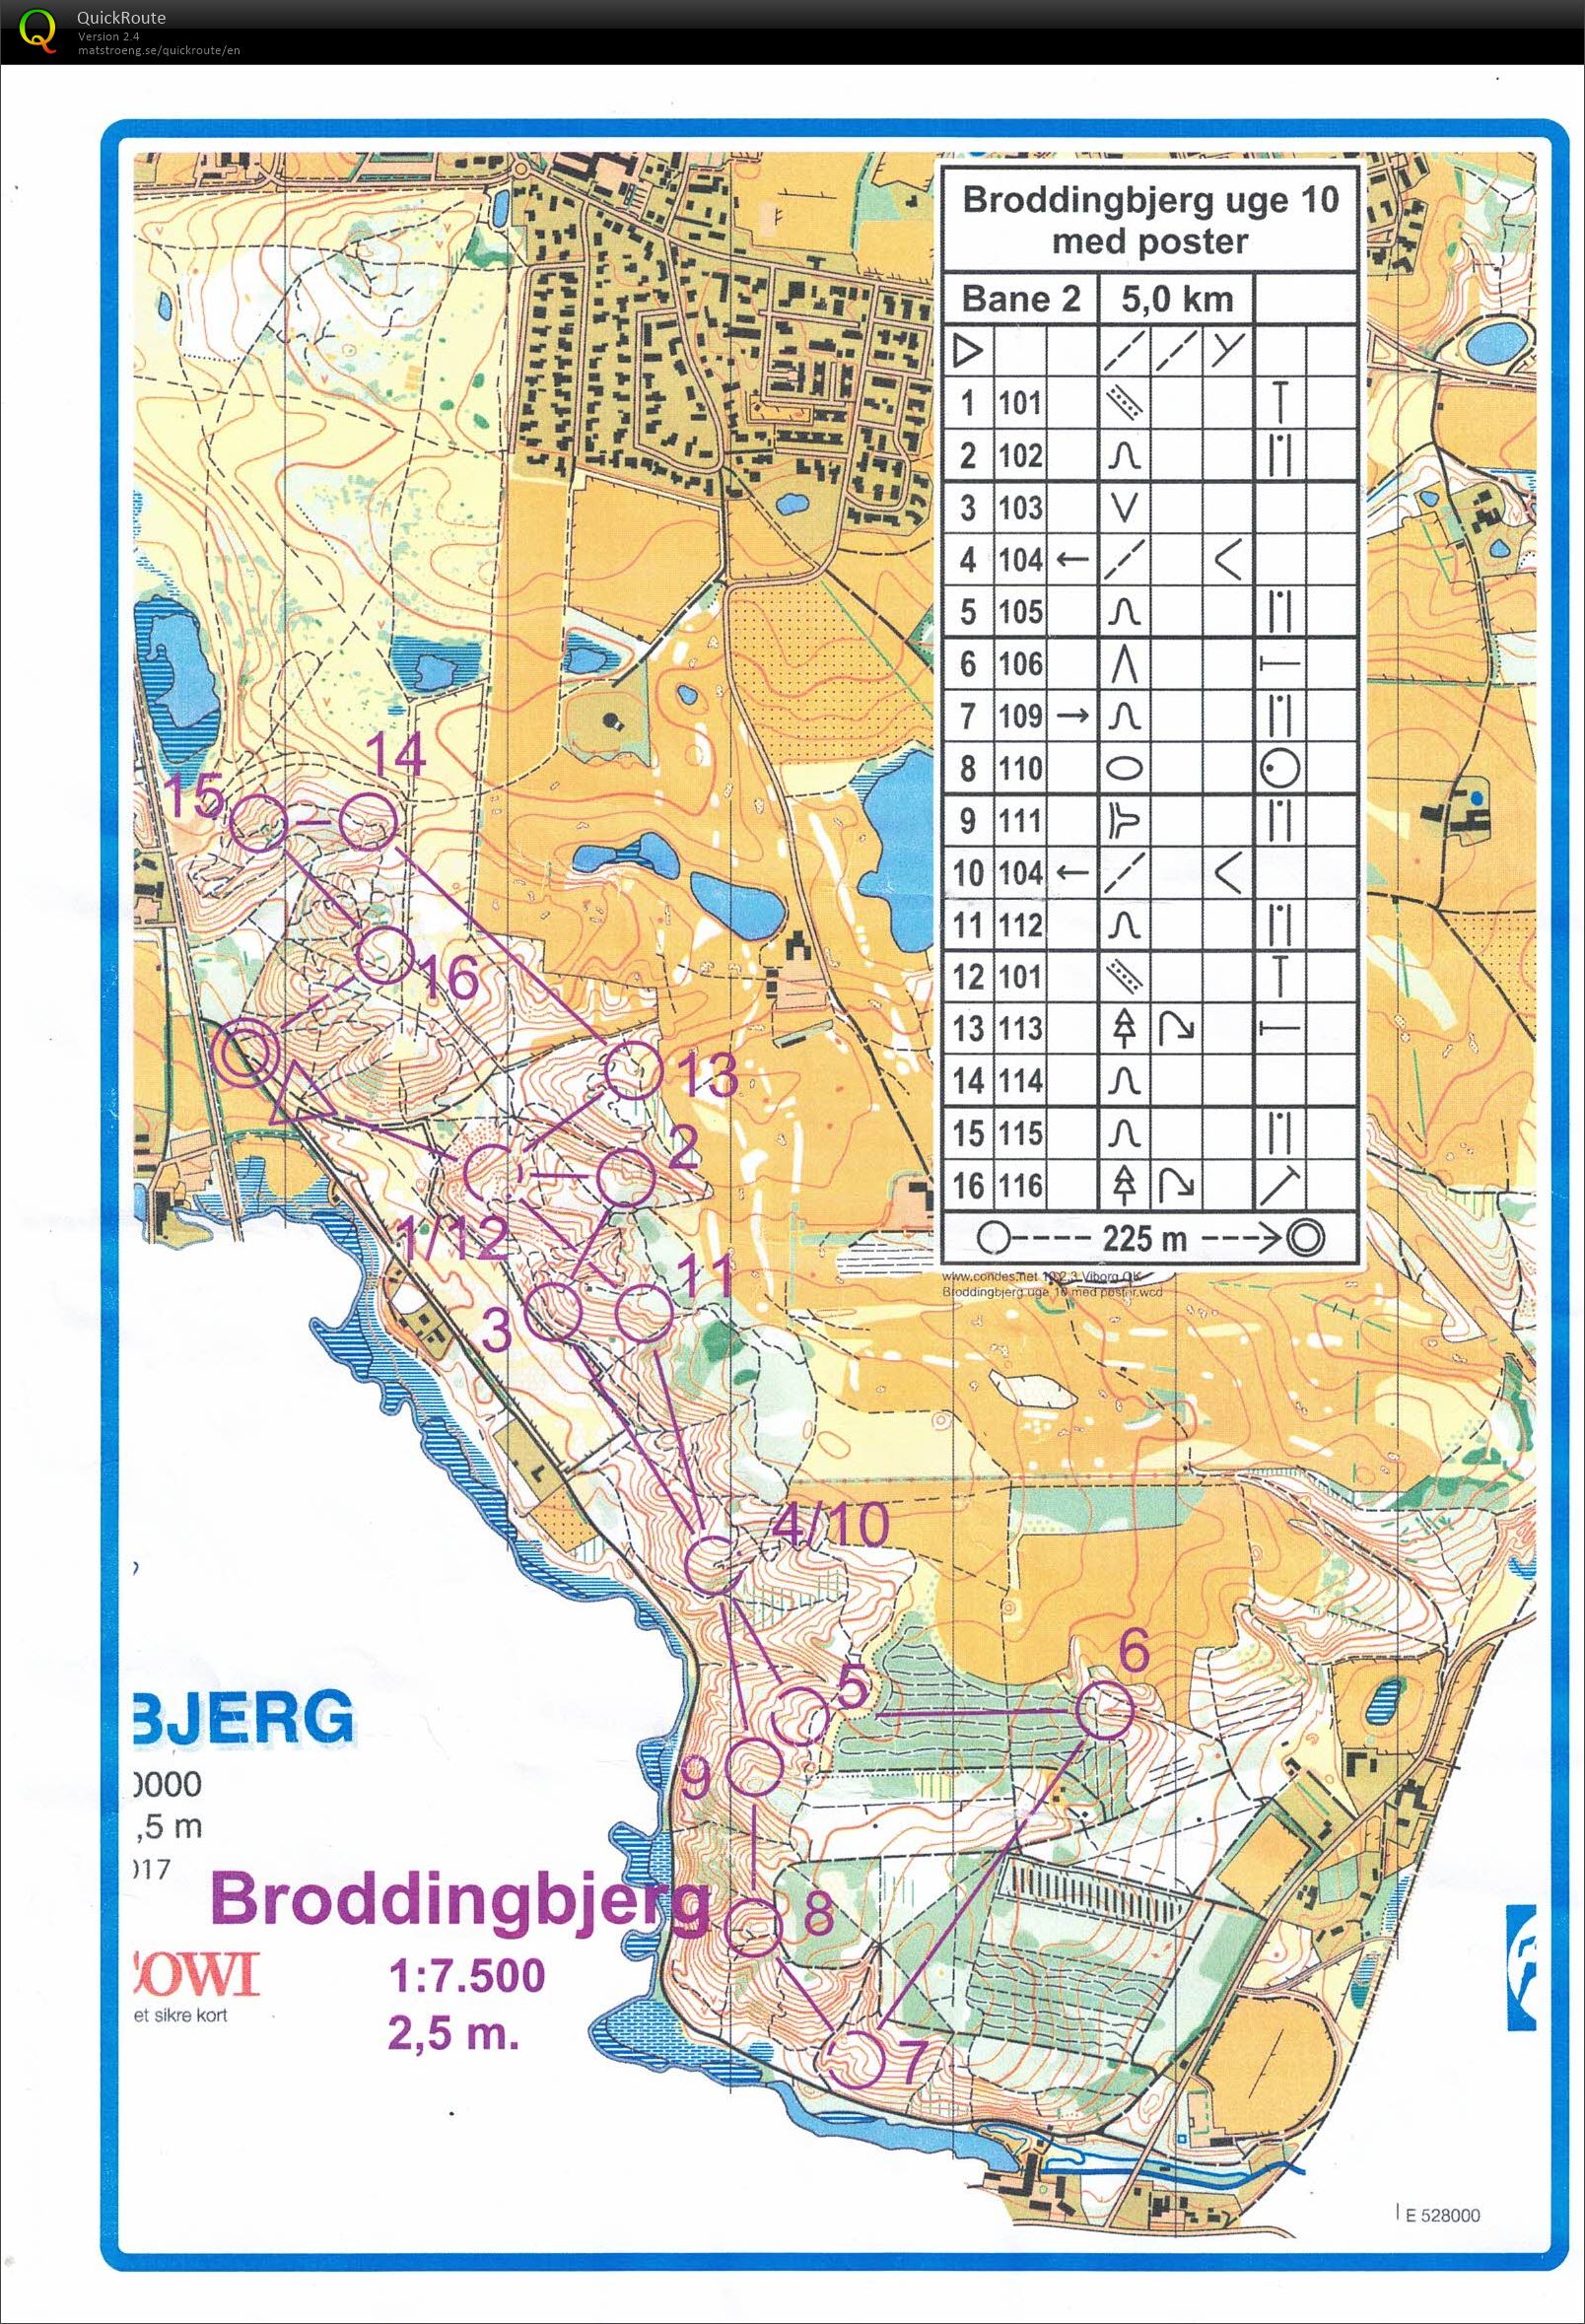 Broddingbjerg bane 2 (2021-03-08)